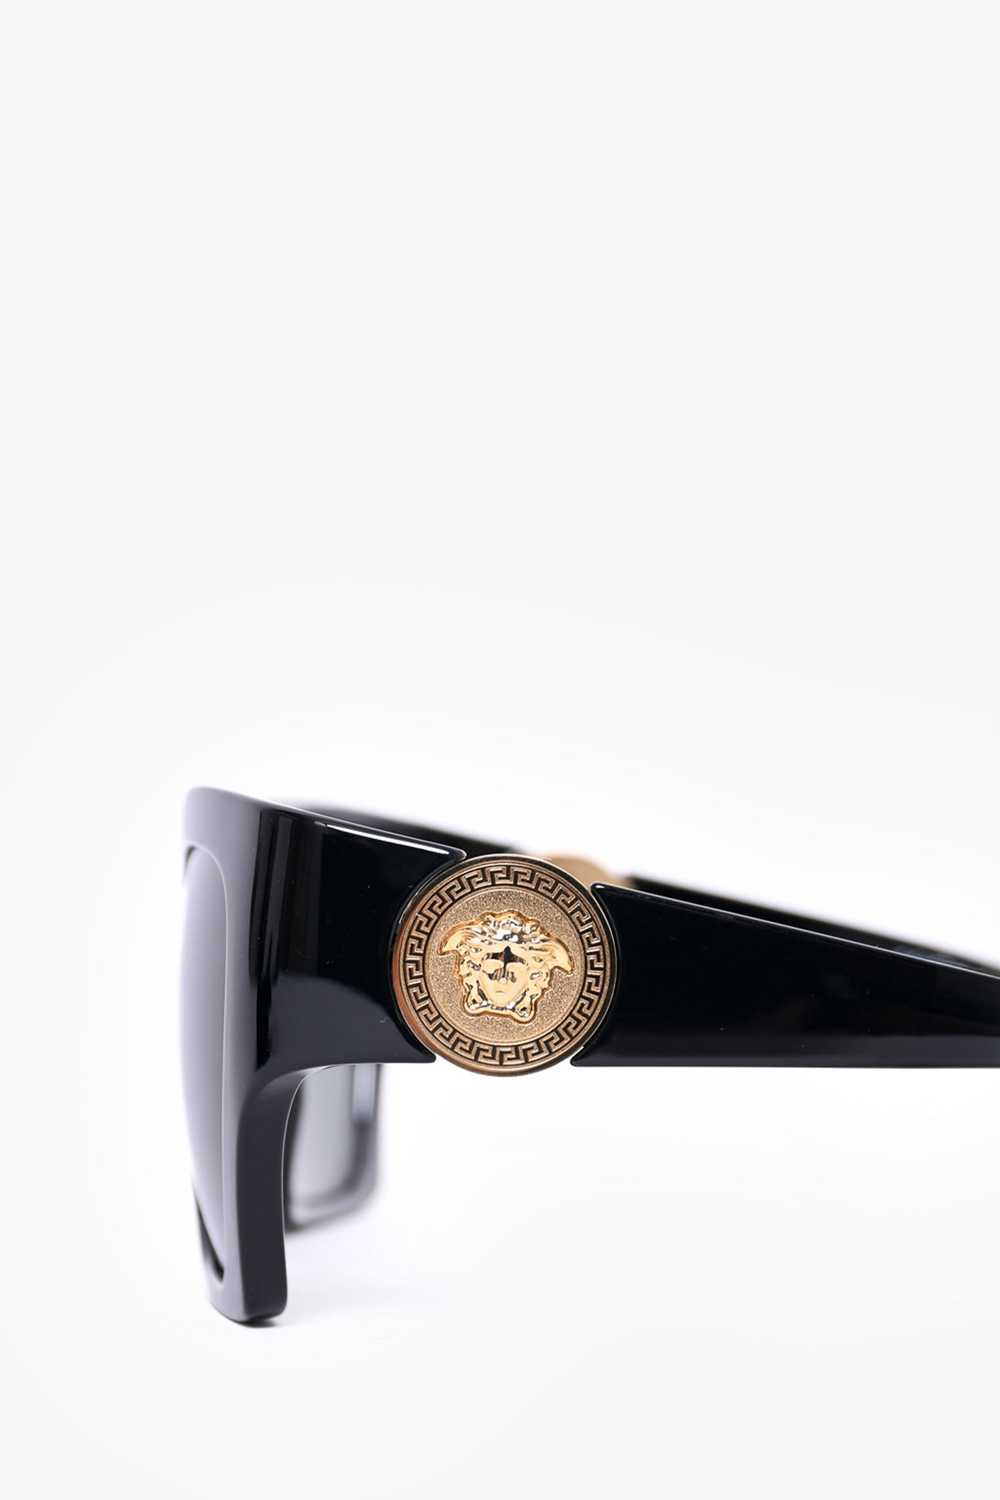 Versace Black Medusa Square Frame Sunglasses - image 4